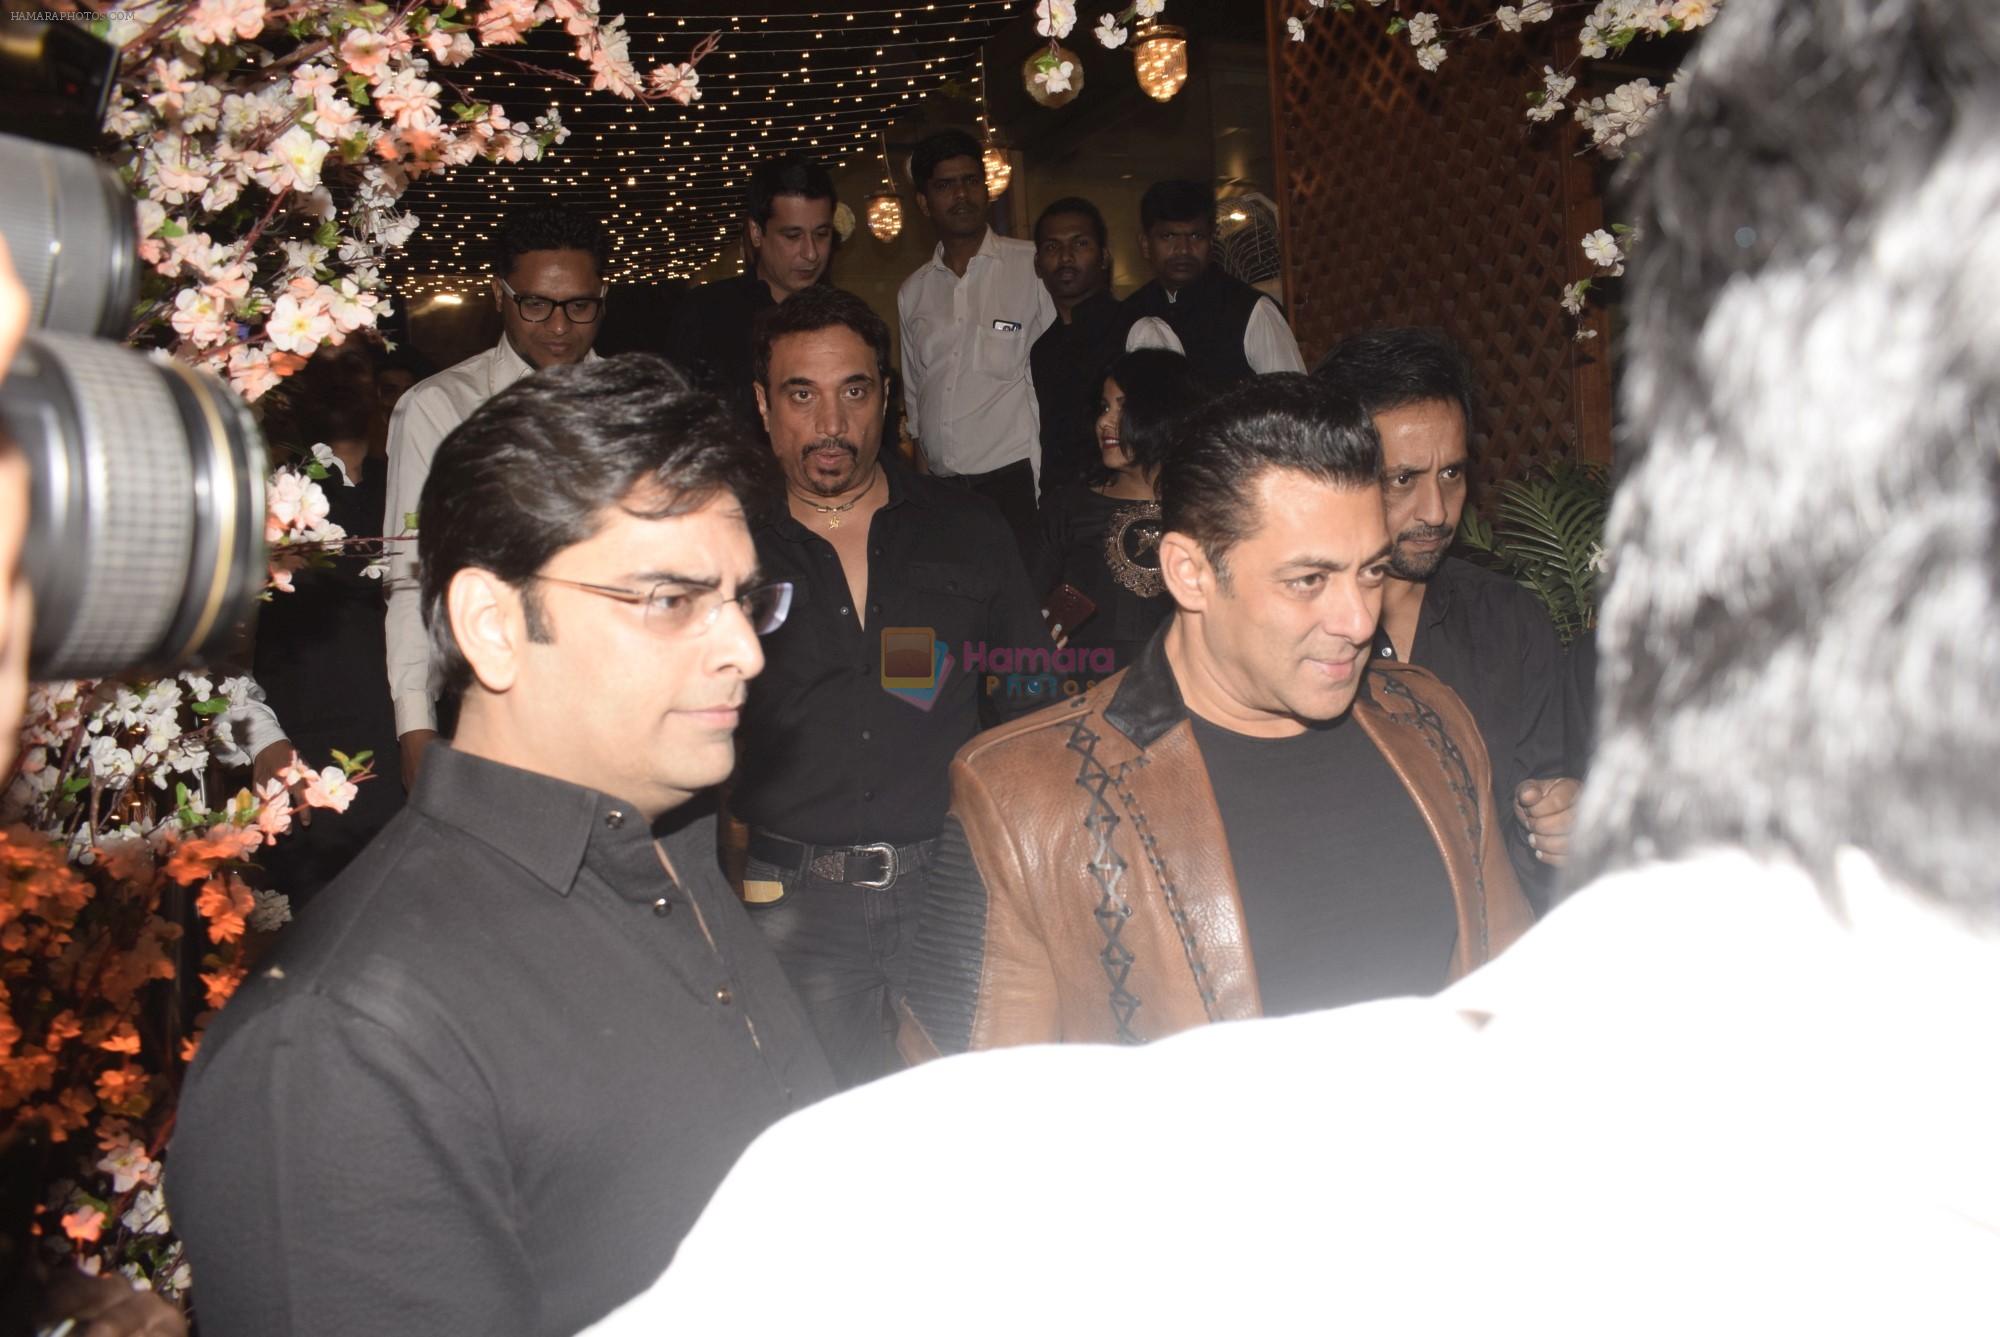 Salman Khan at Sonakshi Sinha's wedding reception in four bungalows, andheri on 17th Feb 2019